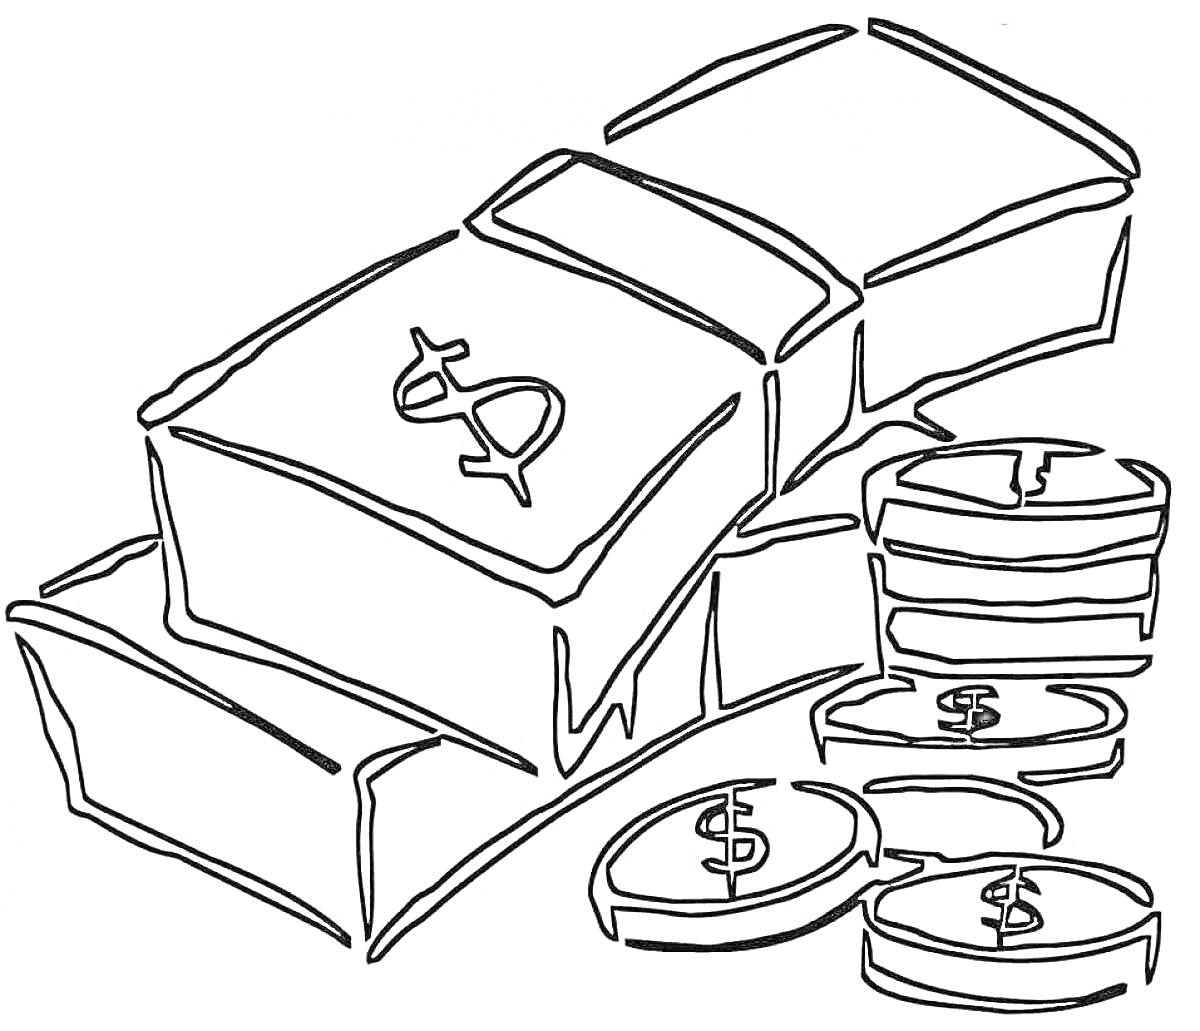 Раскраска Пачки денег и монеты с символами доллара